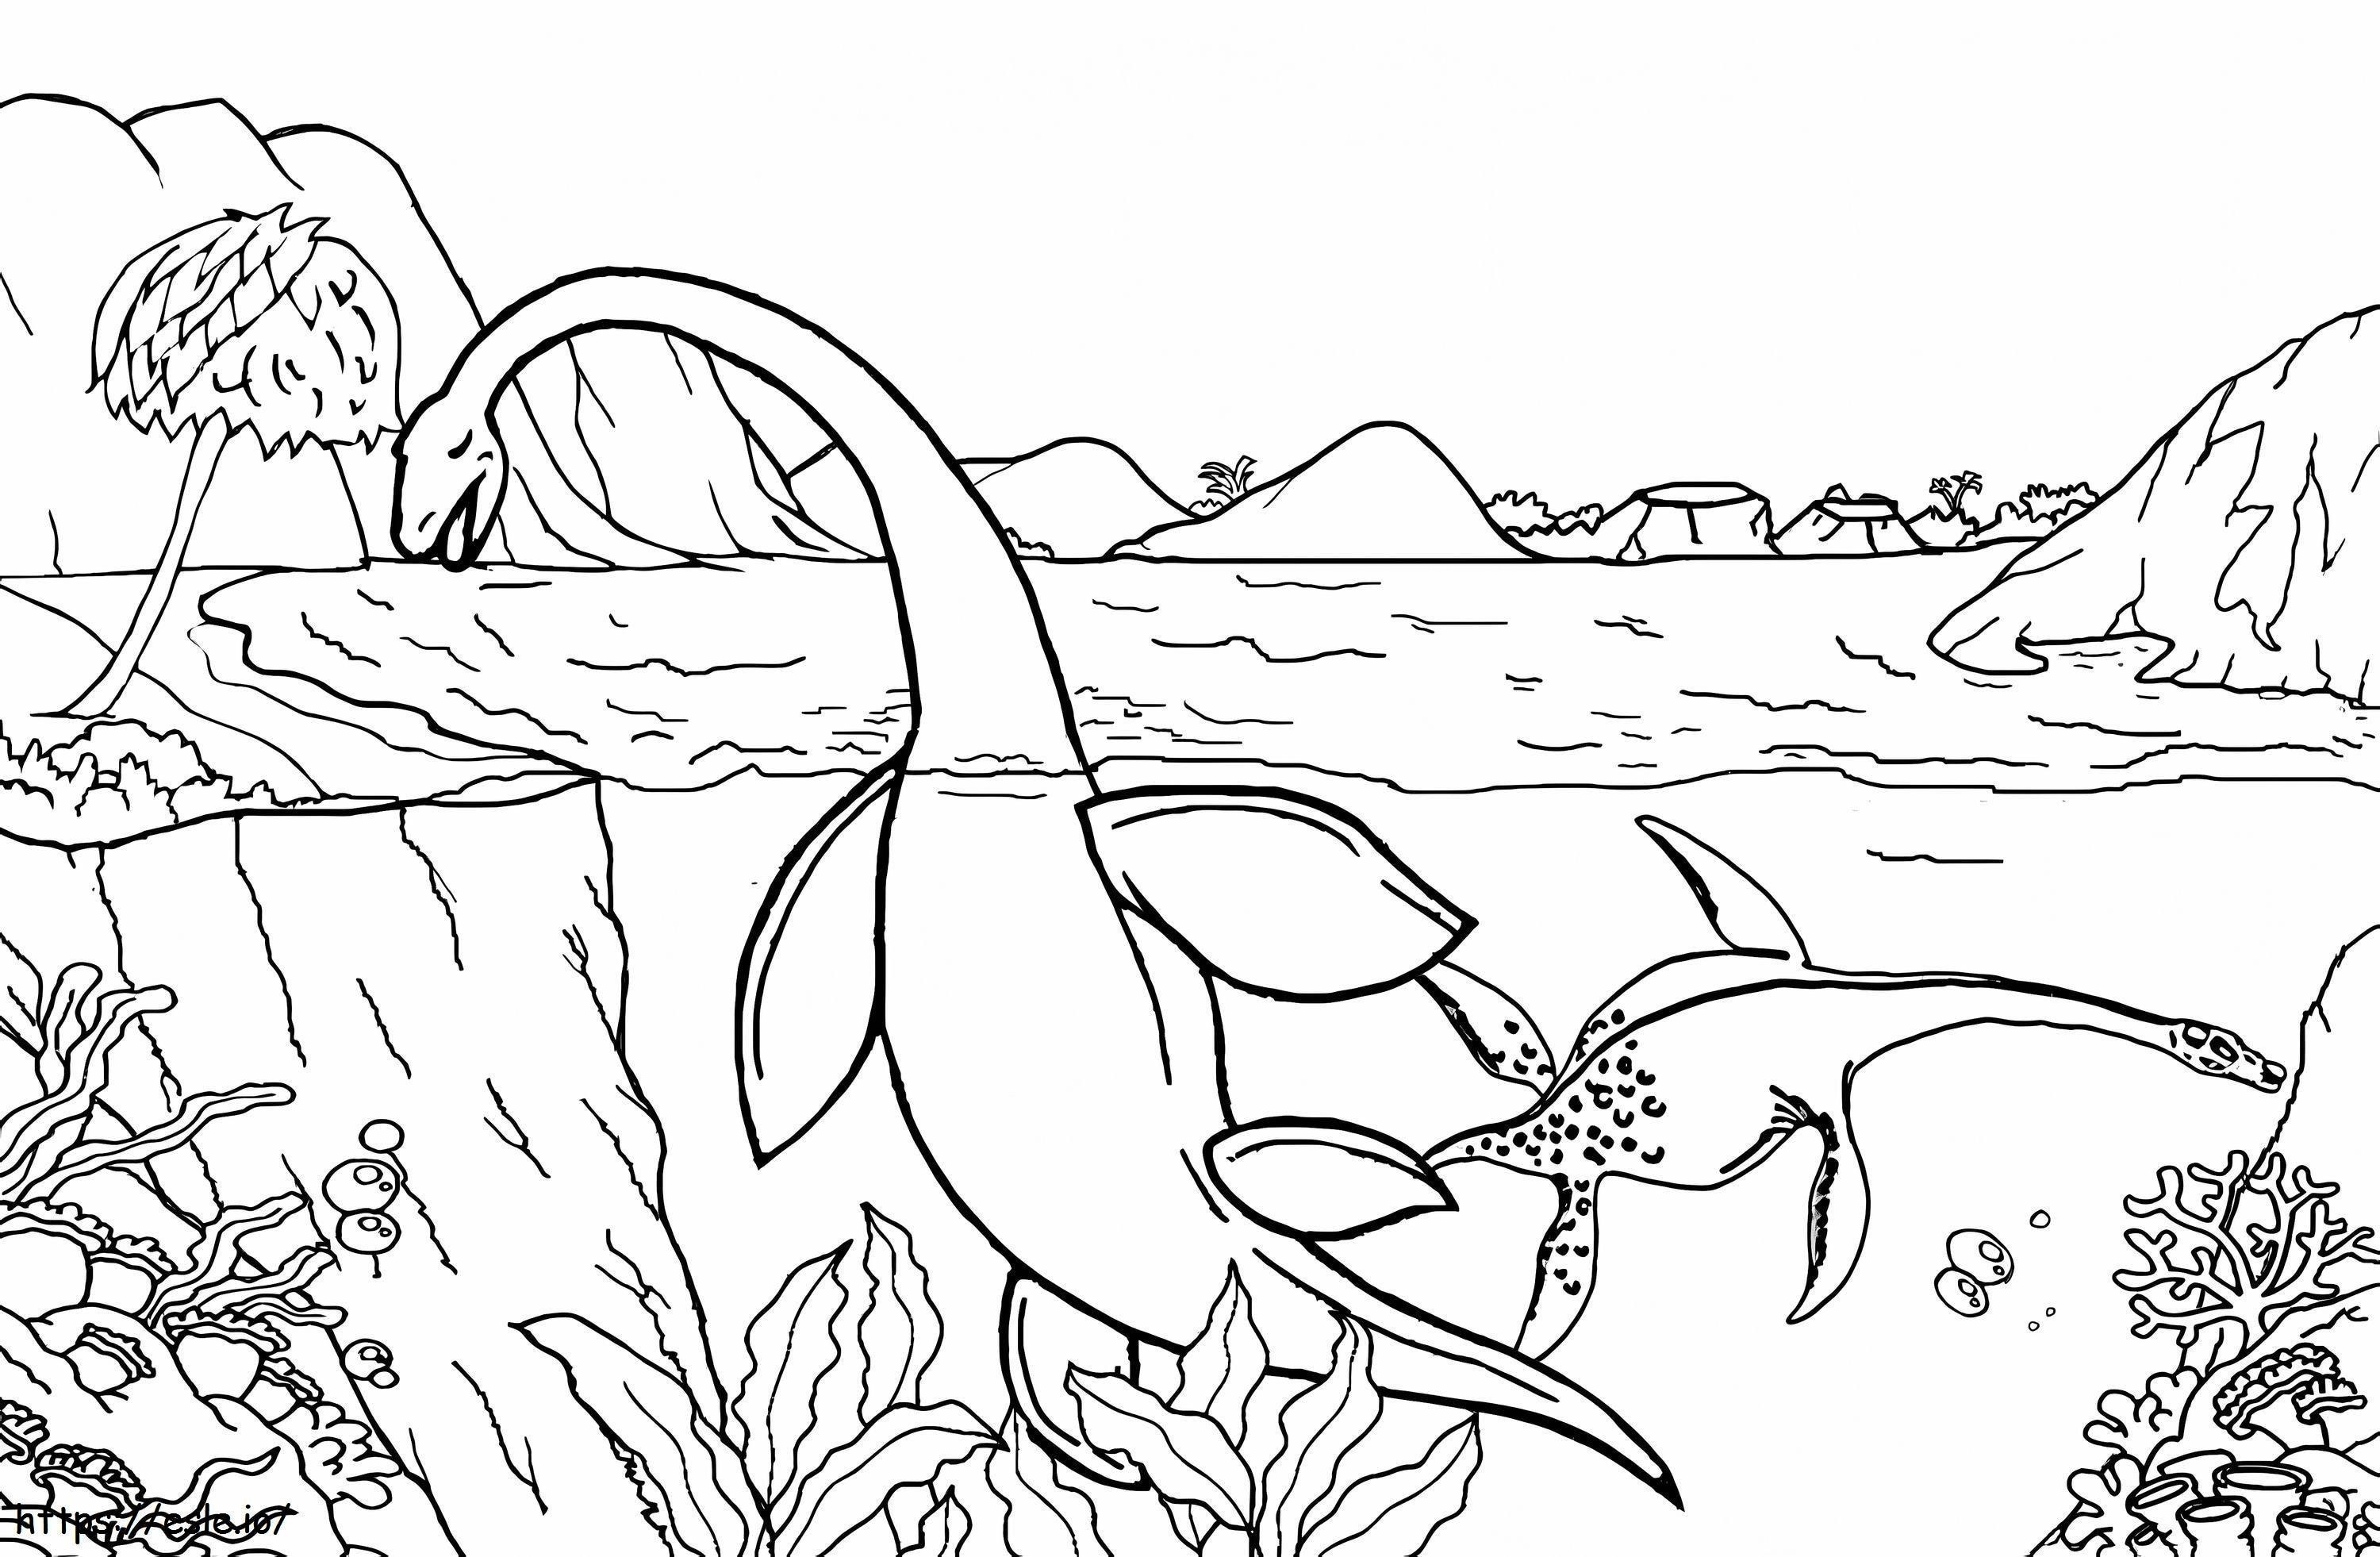 1541231335_Most_Dangerous_Jurassic_Creatures_Drawing_Sea_Dinosaur_Prehistoric_Ocean_Coloring_Pages_For_Children para colorir